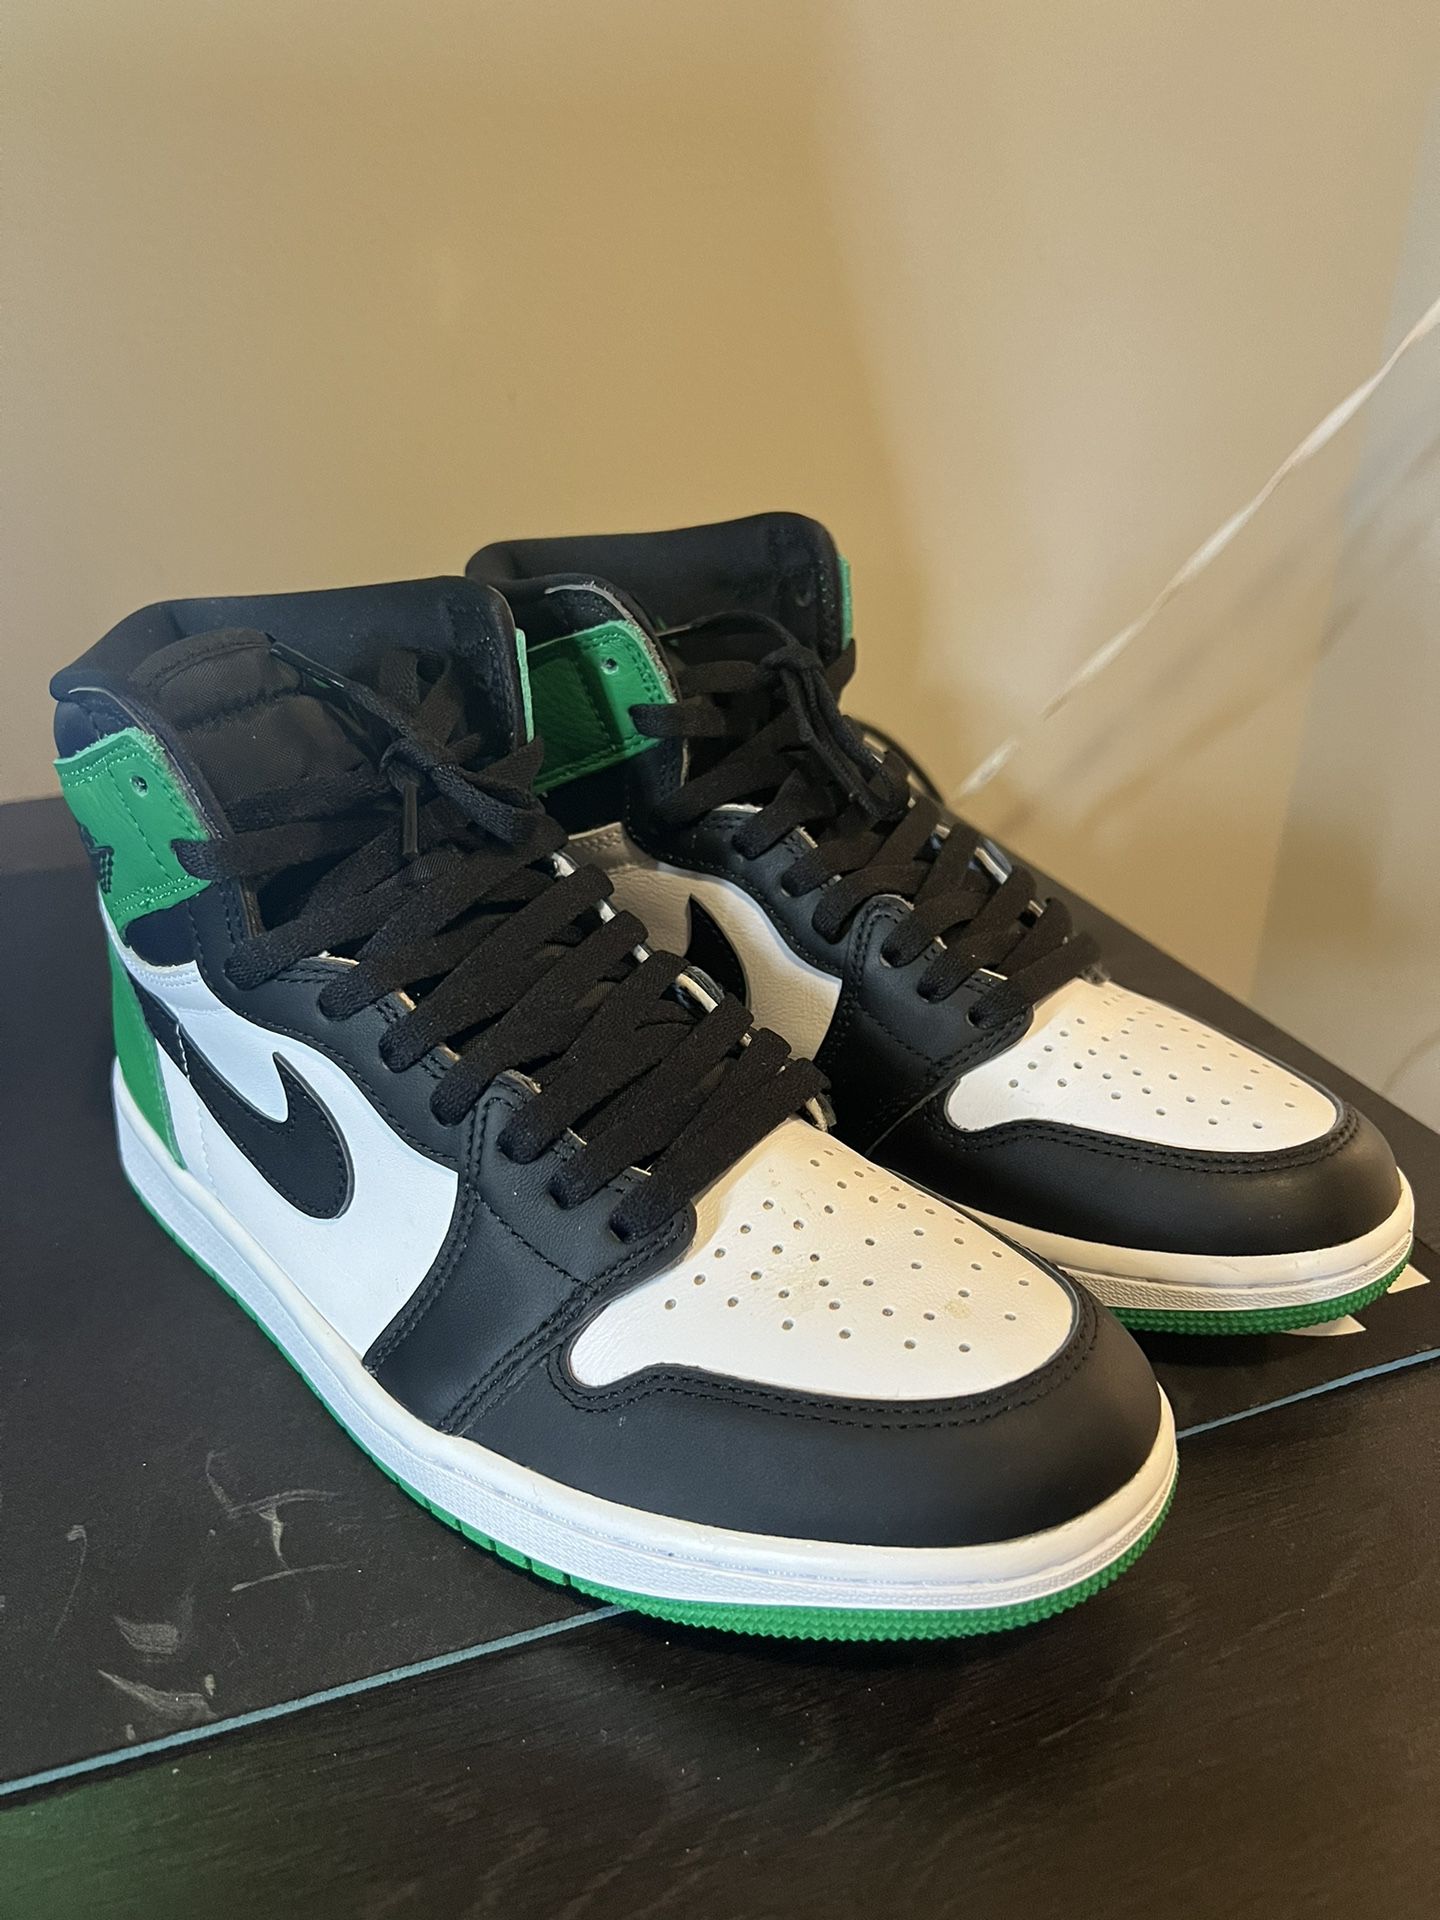 Nike Air Jordan 1 Lucky Green Size Men’s 9.5 Used